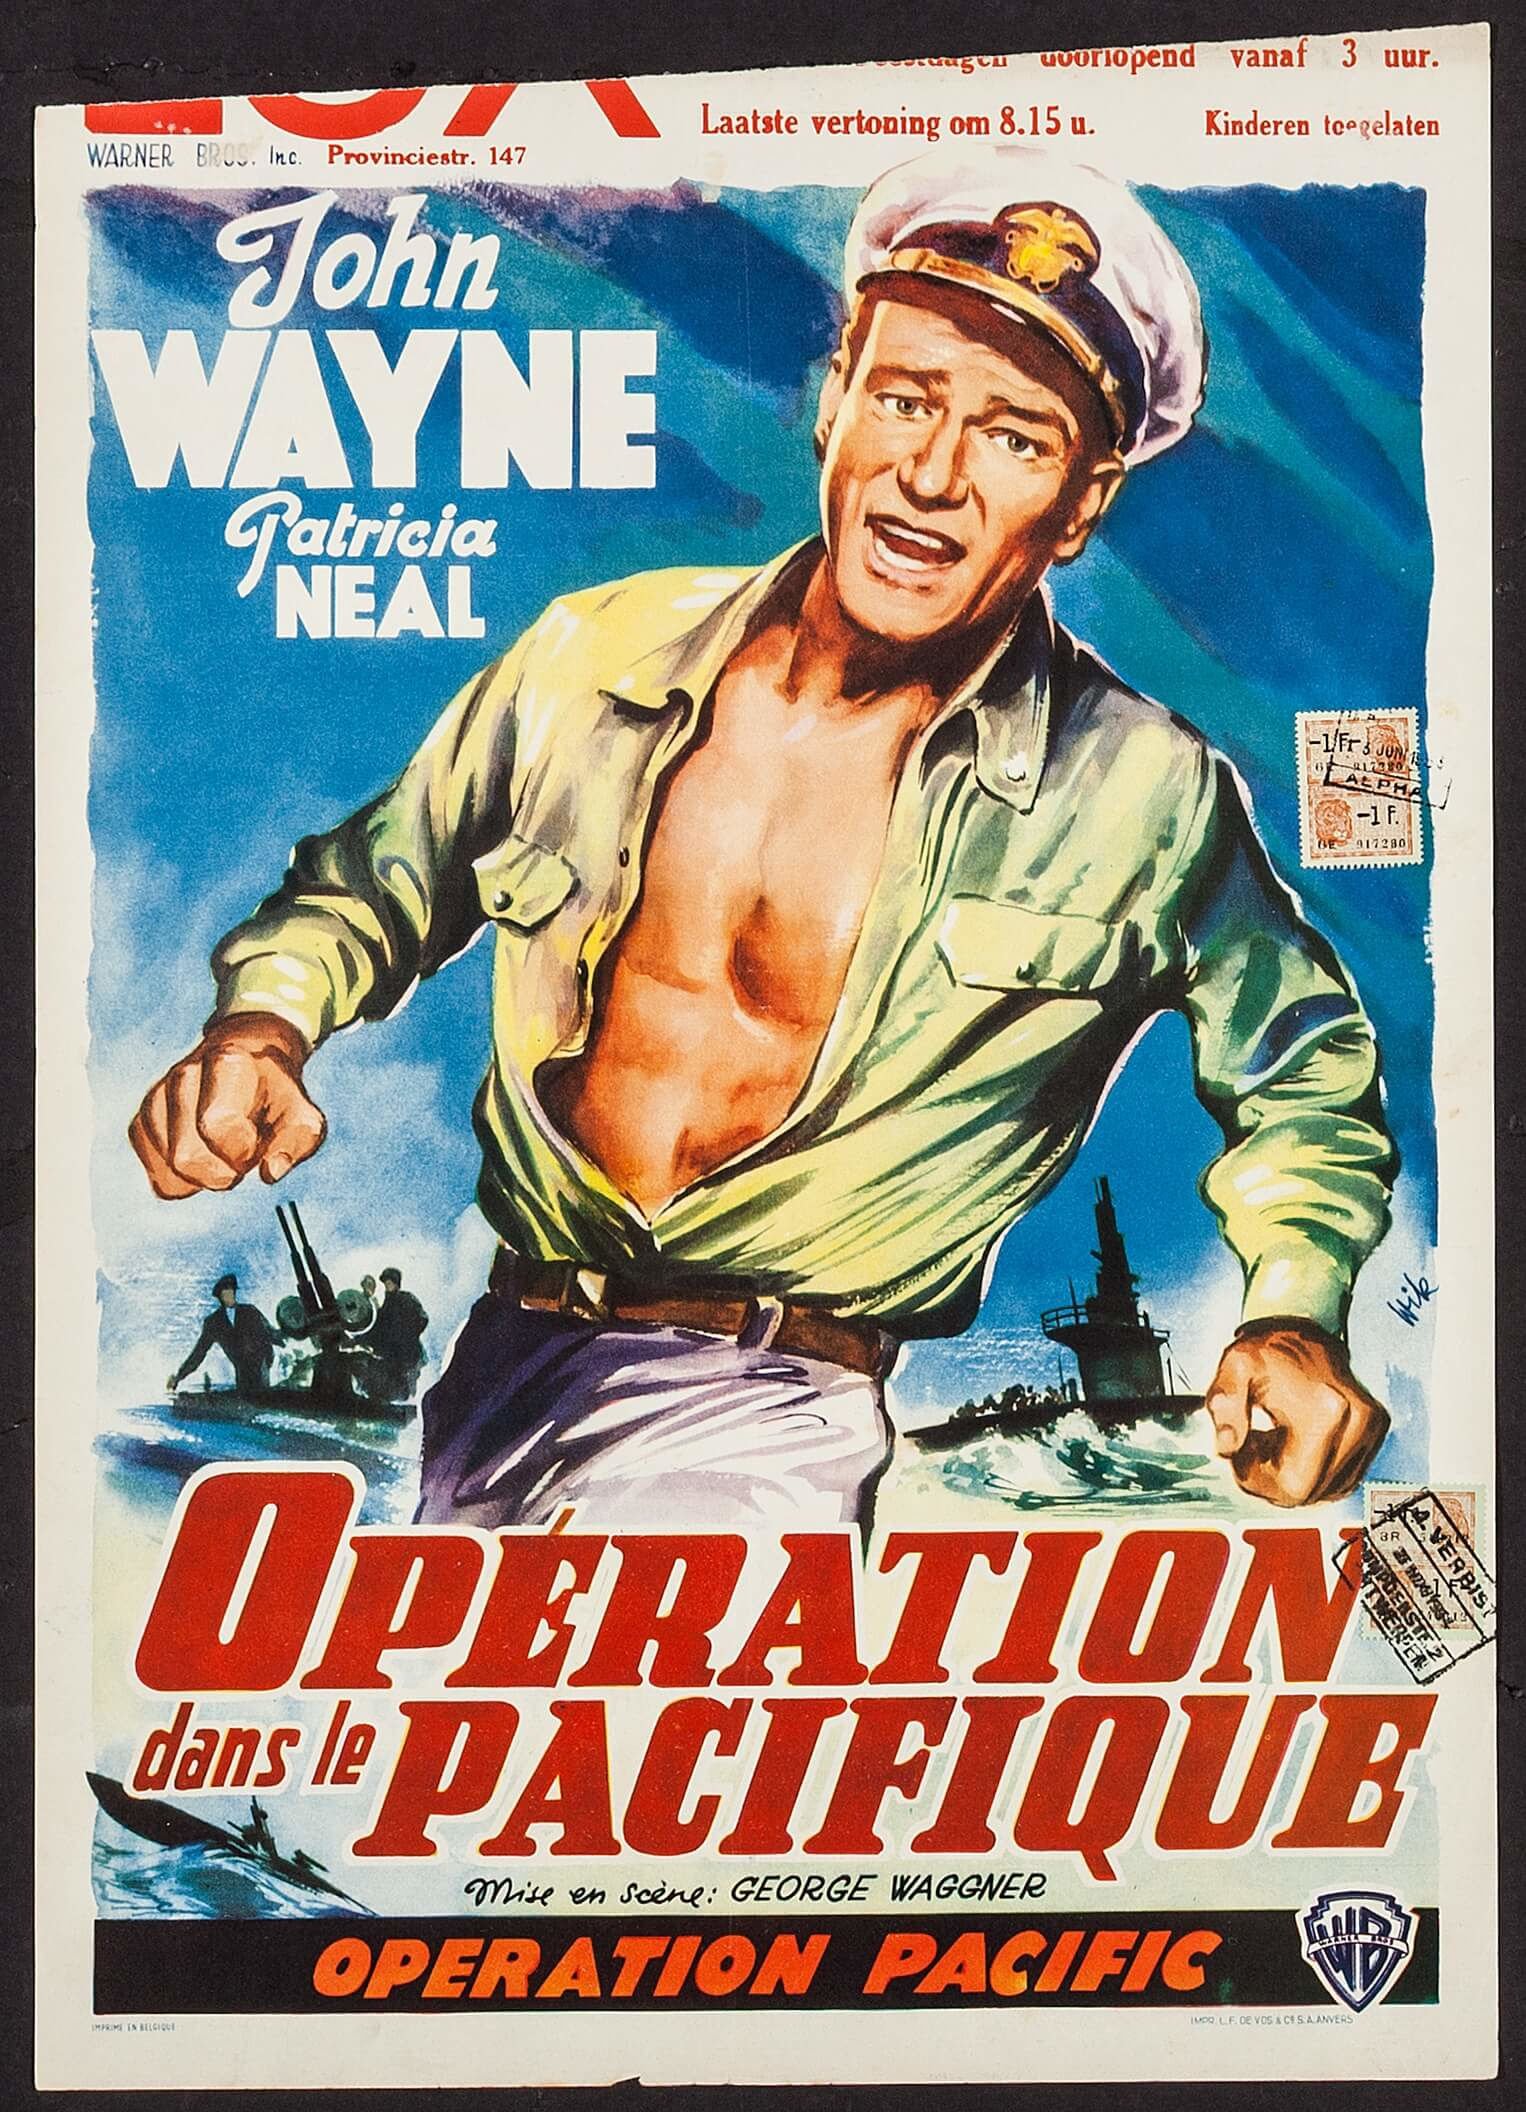 Operation Pacific (1951) starring John Wayne on DVD on DVD